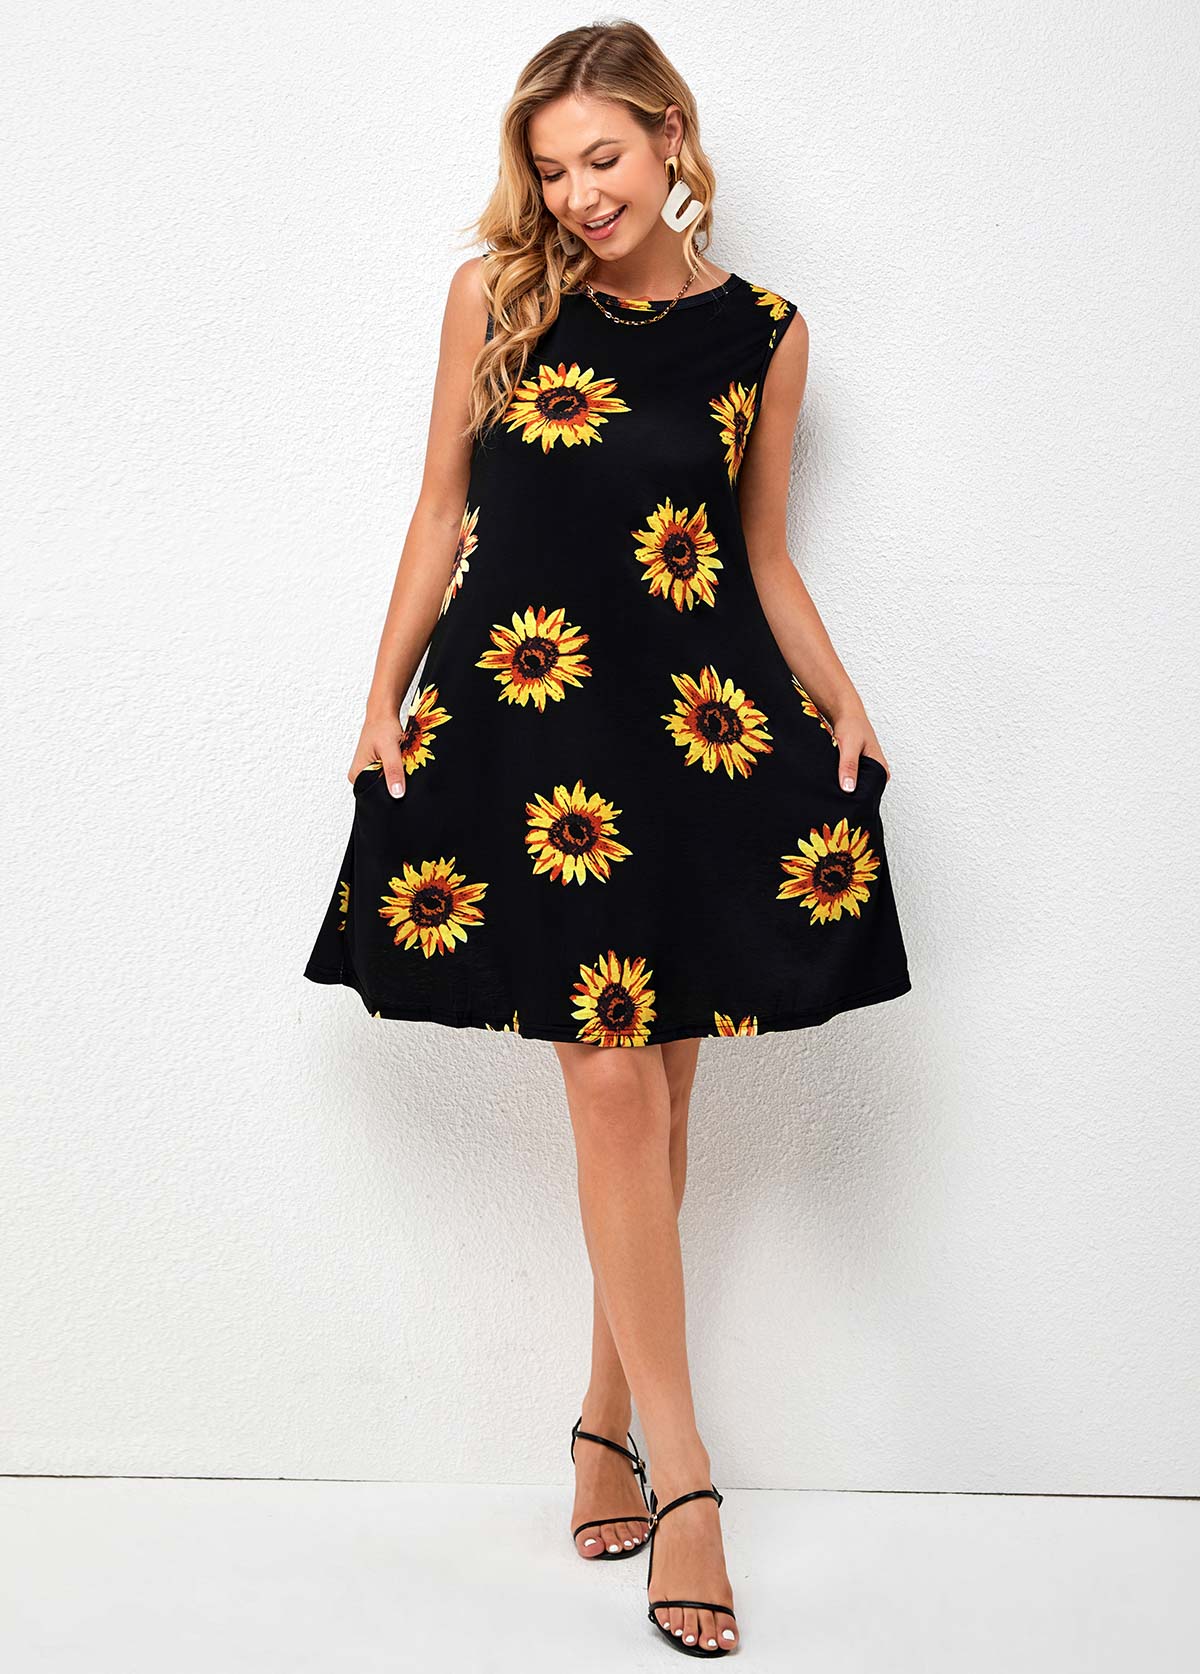 Sunflower Print Sleeveless Round Neck Dress